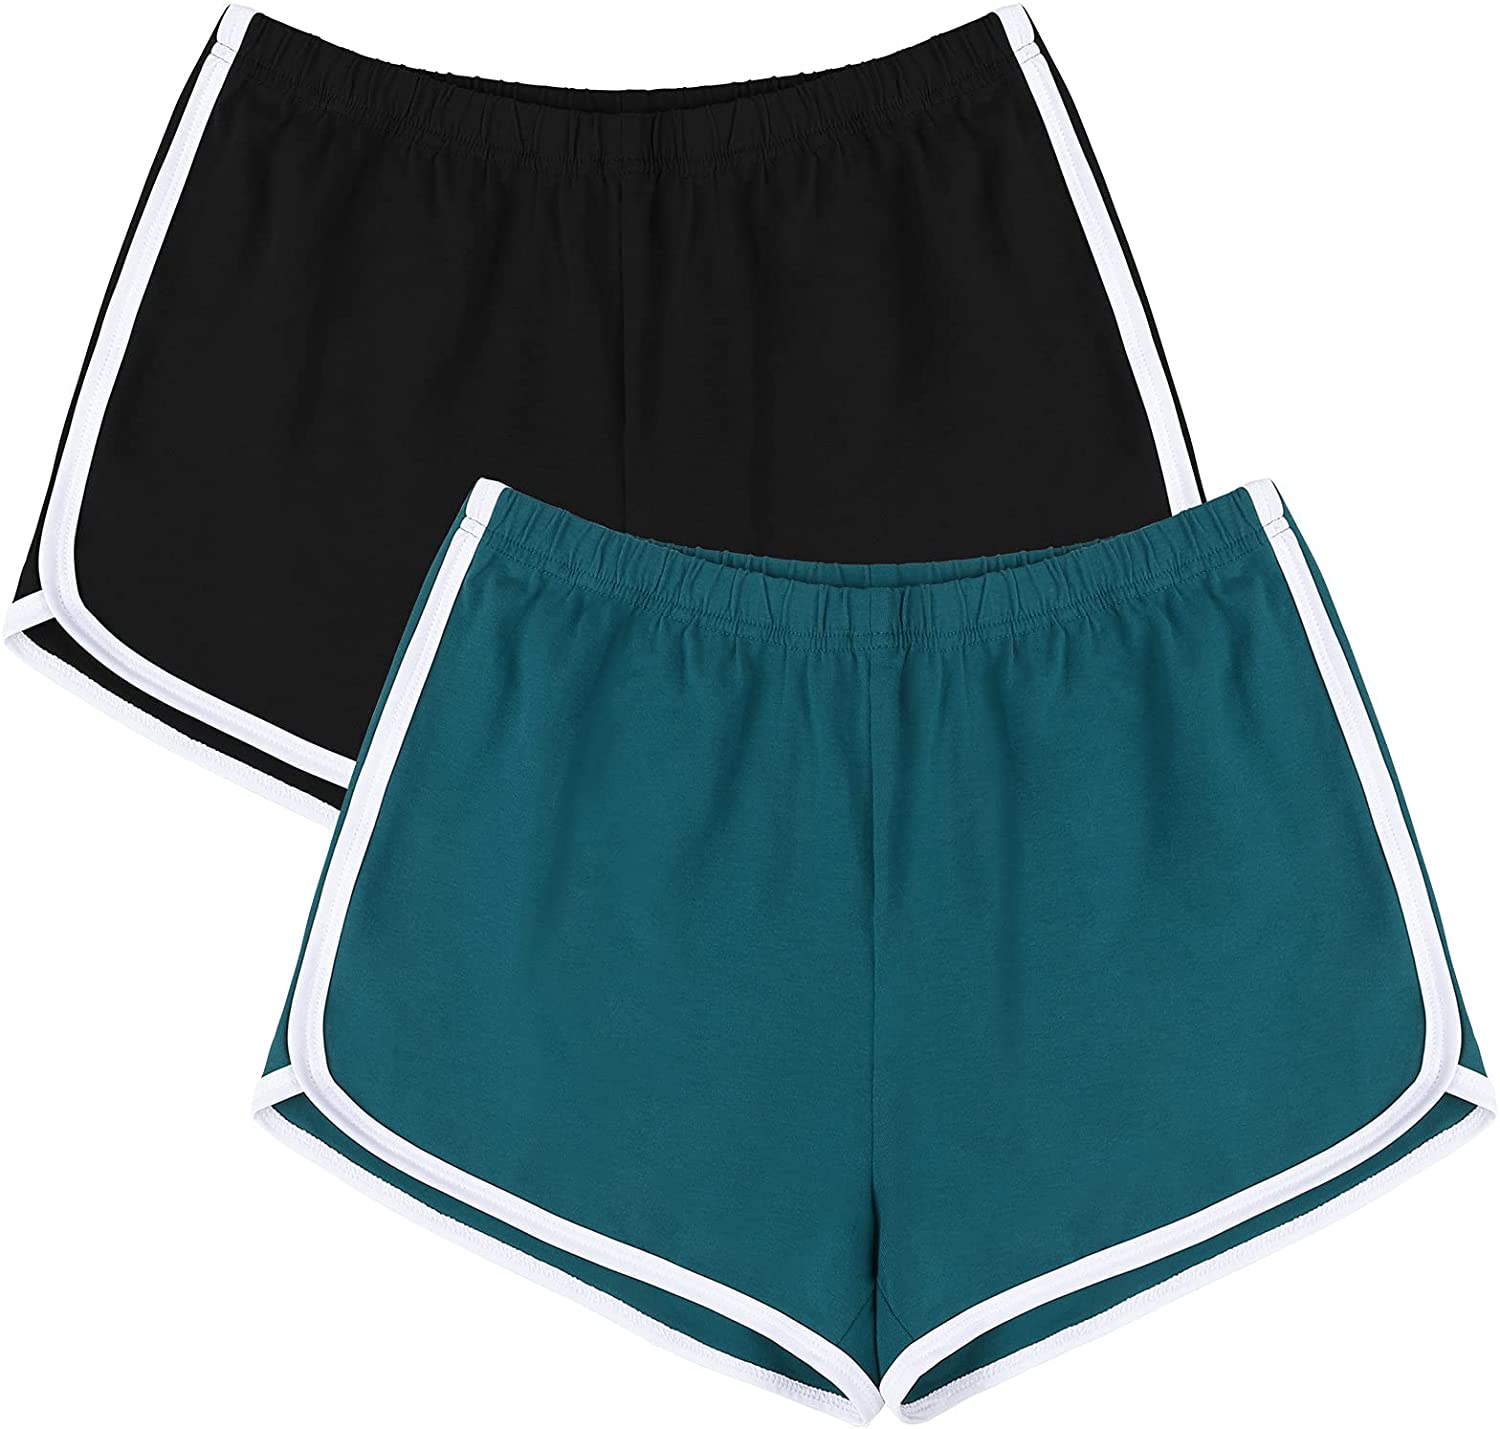 URATOT 2 Pack Cotton Sports Shorts Yoga Dance Short Pants Summer Running Athletic Elastic Waist Shorts 